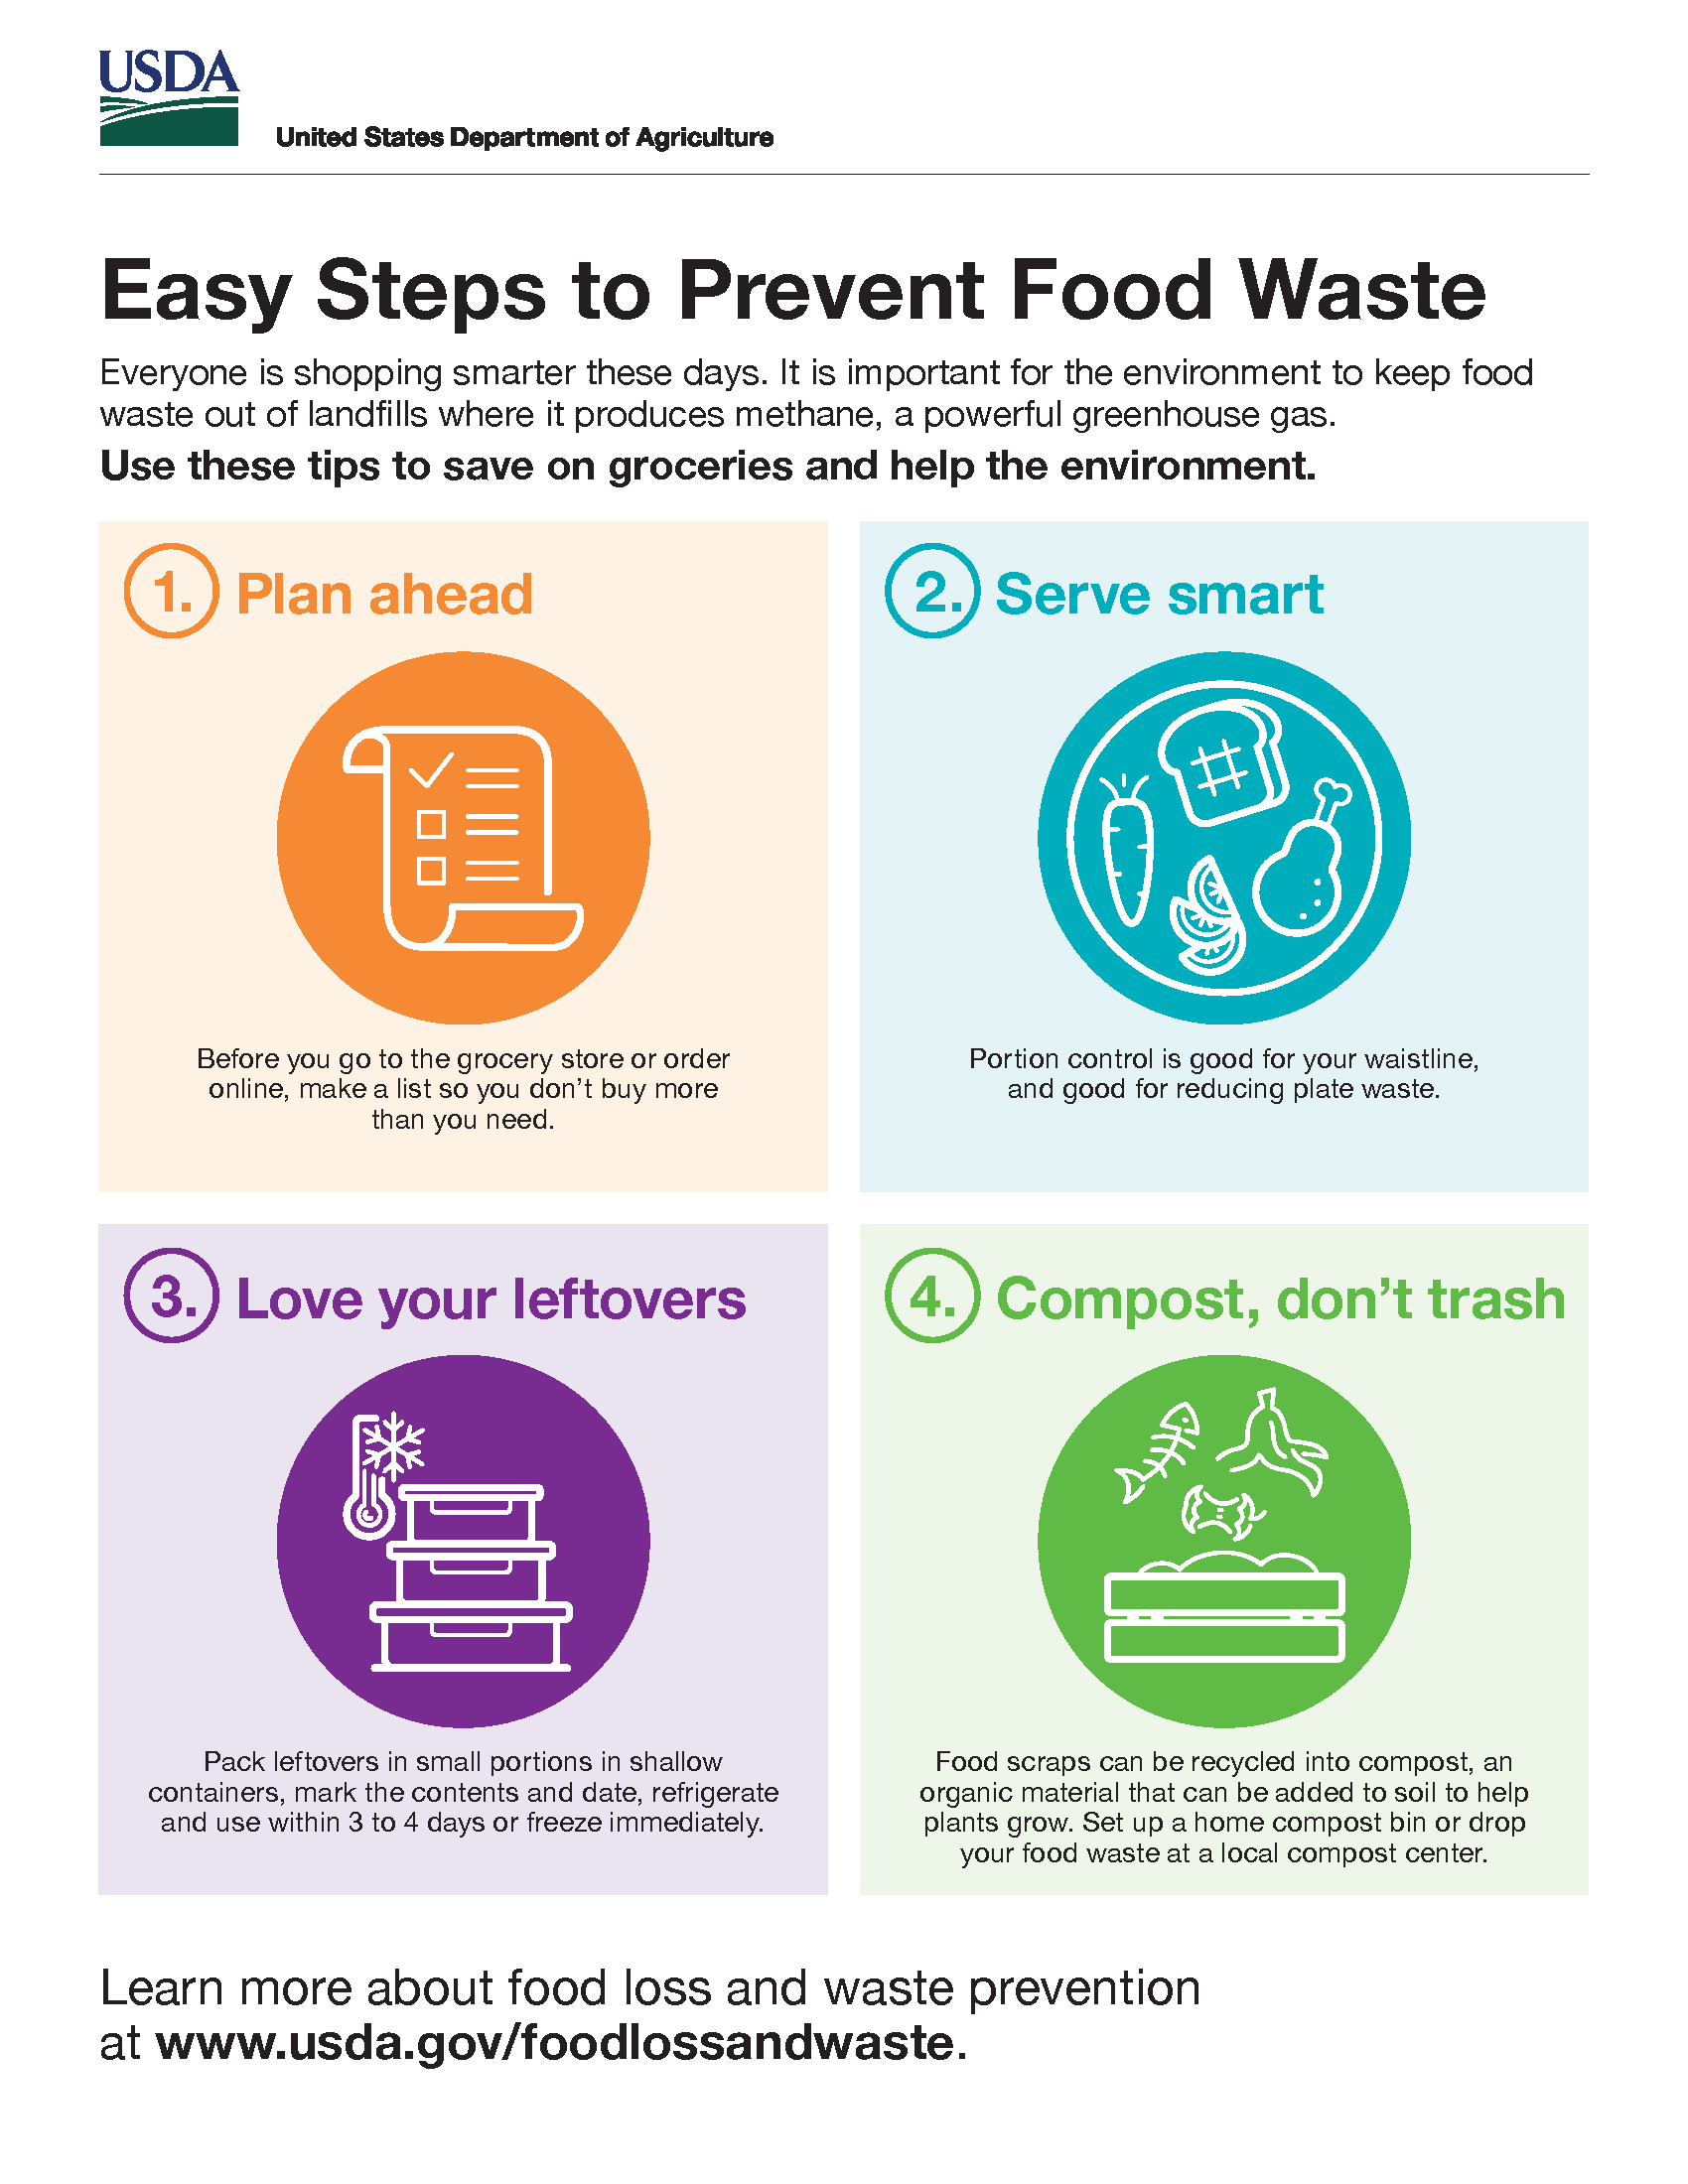 Food waste prevention